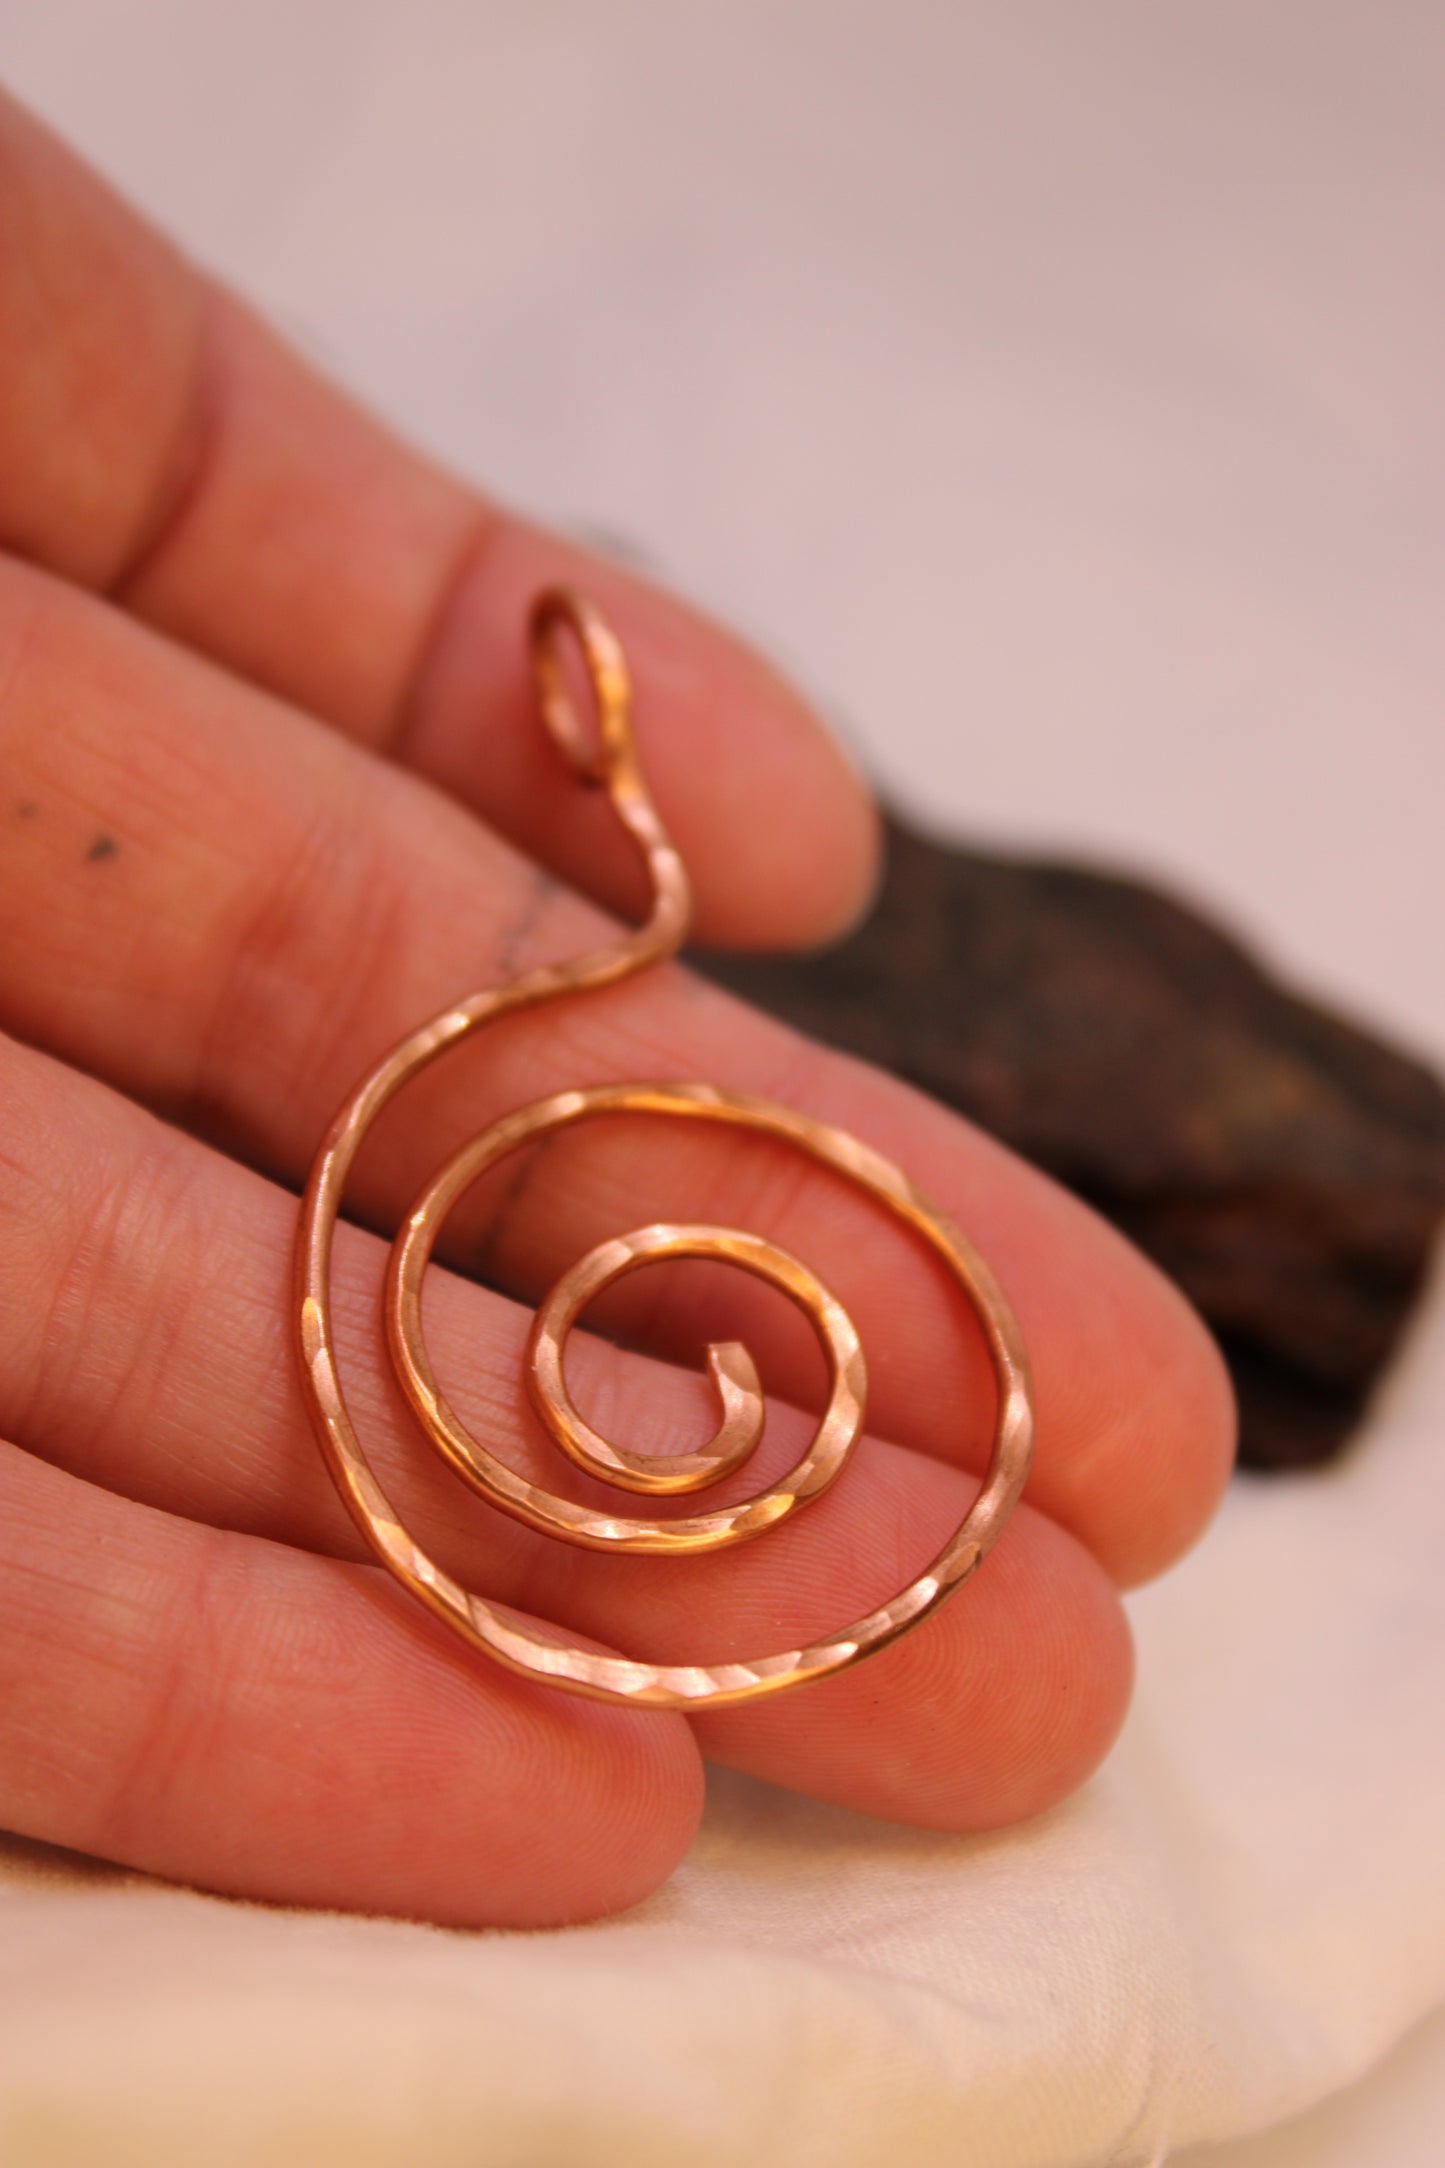 Hammered Copper Spiral Geometric Pendant Jewelry